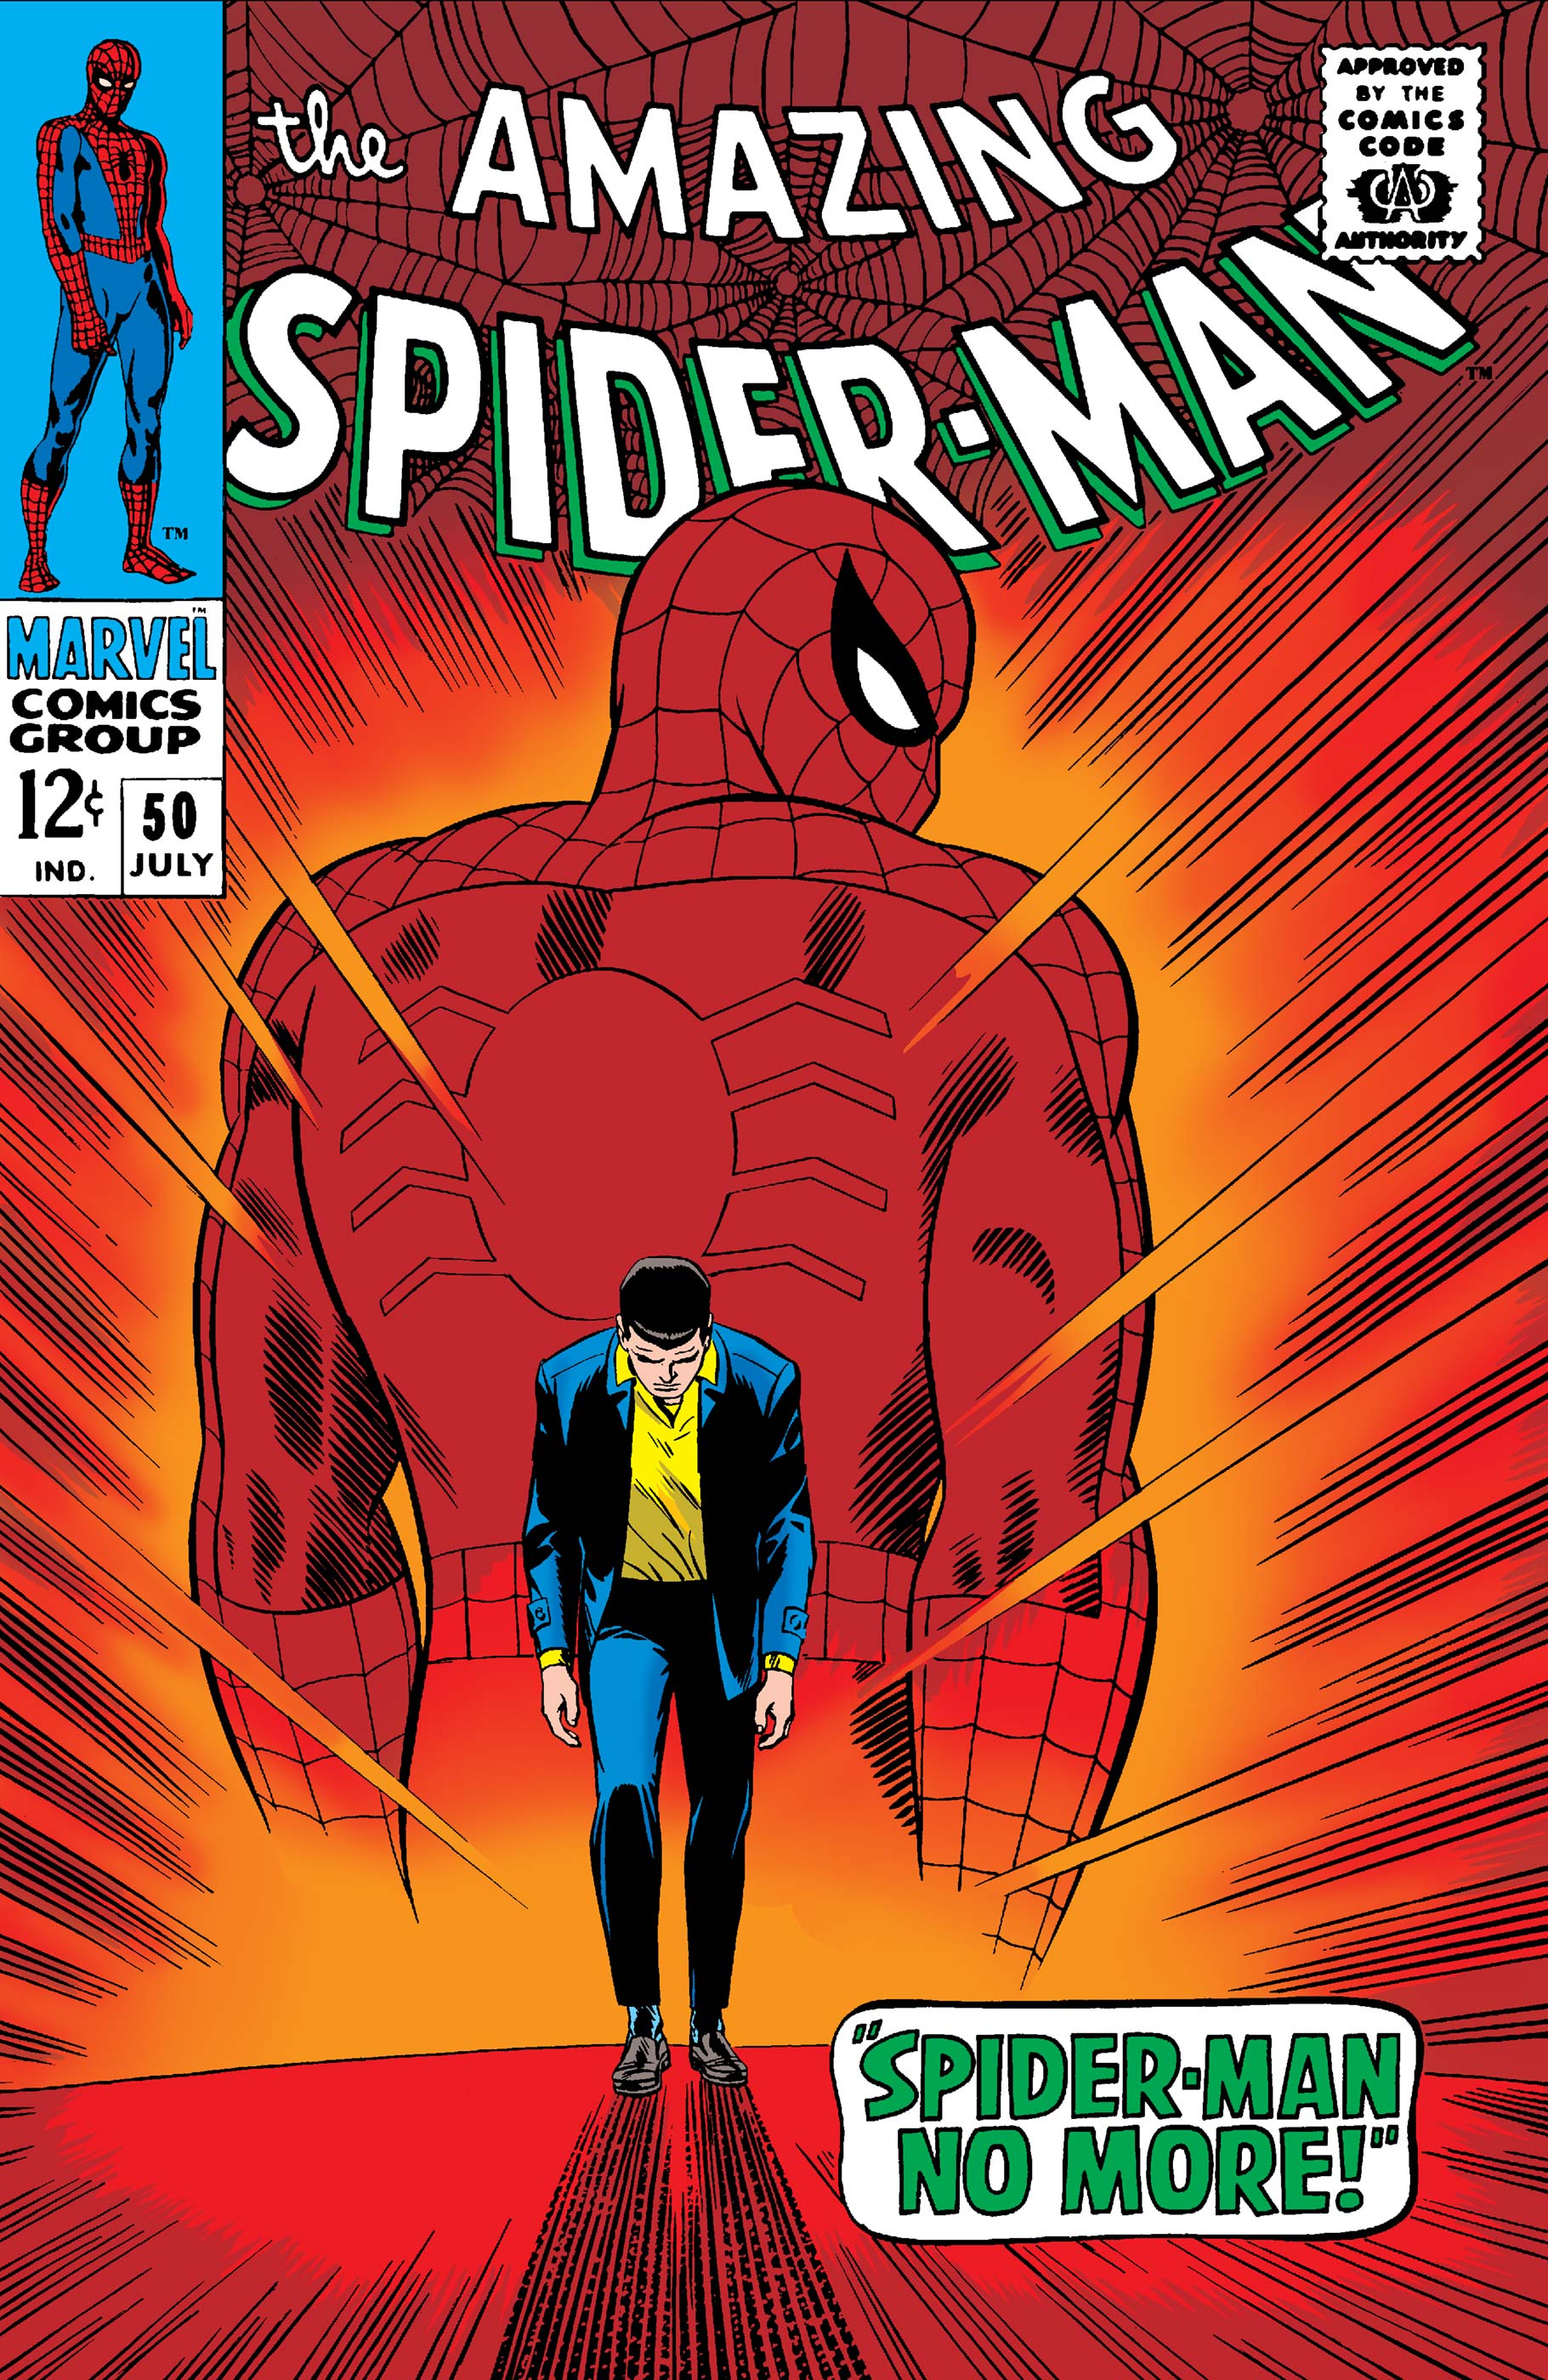 The Amazing Spider-Man (1963) #50